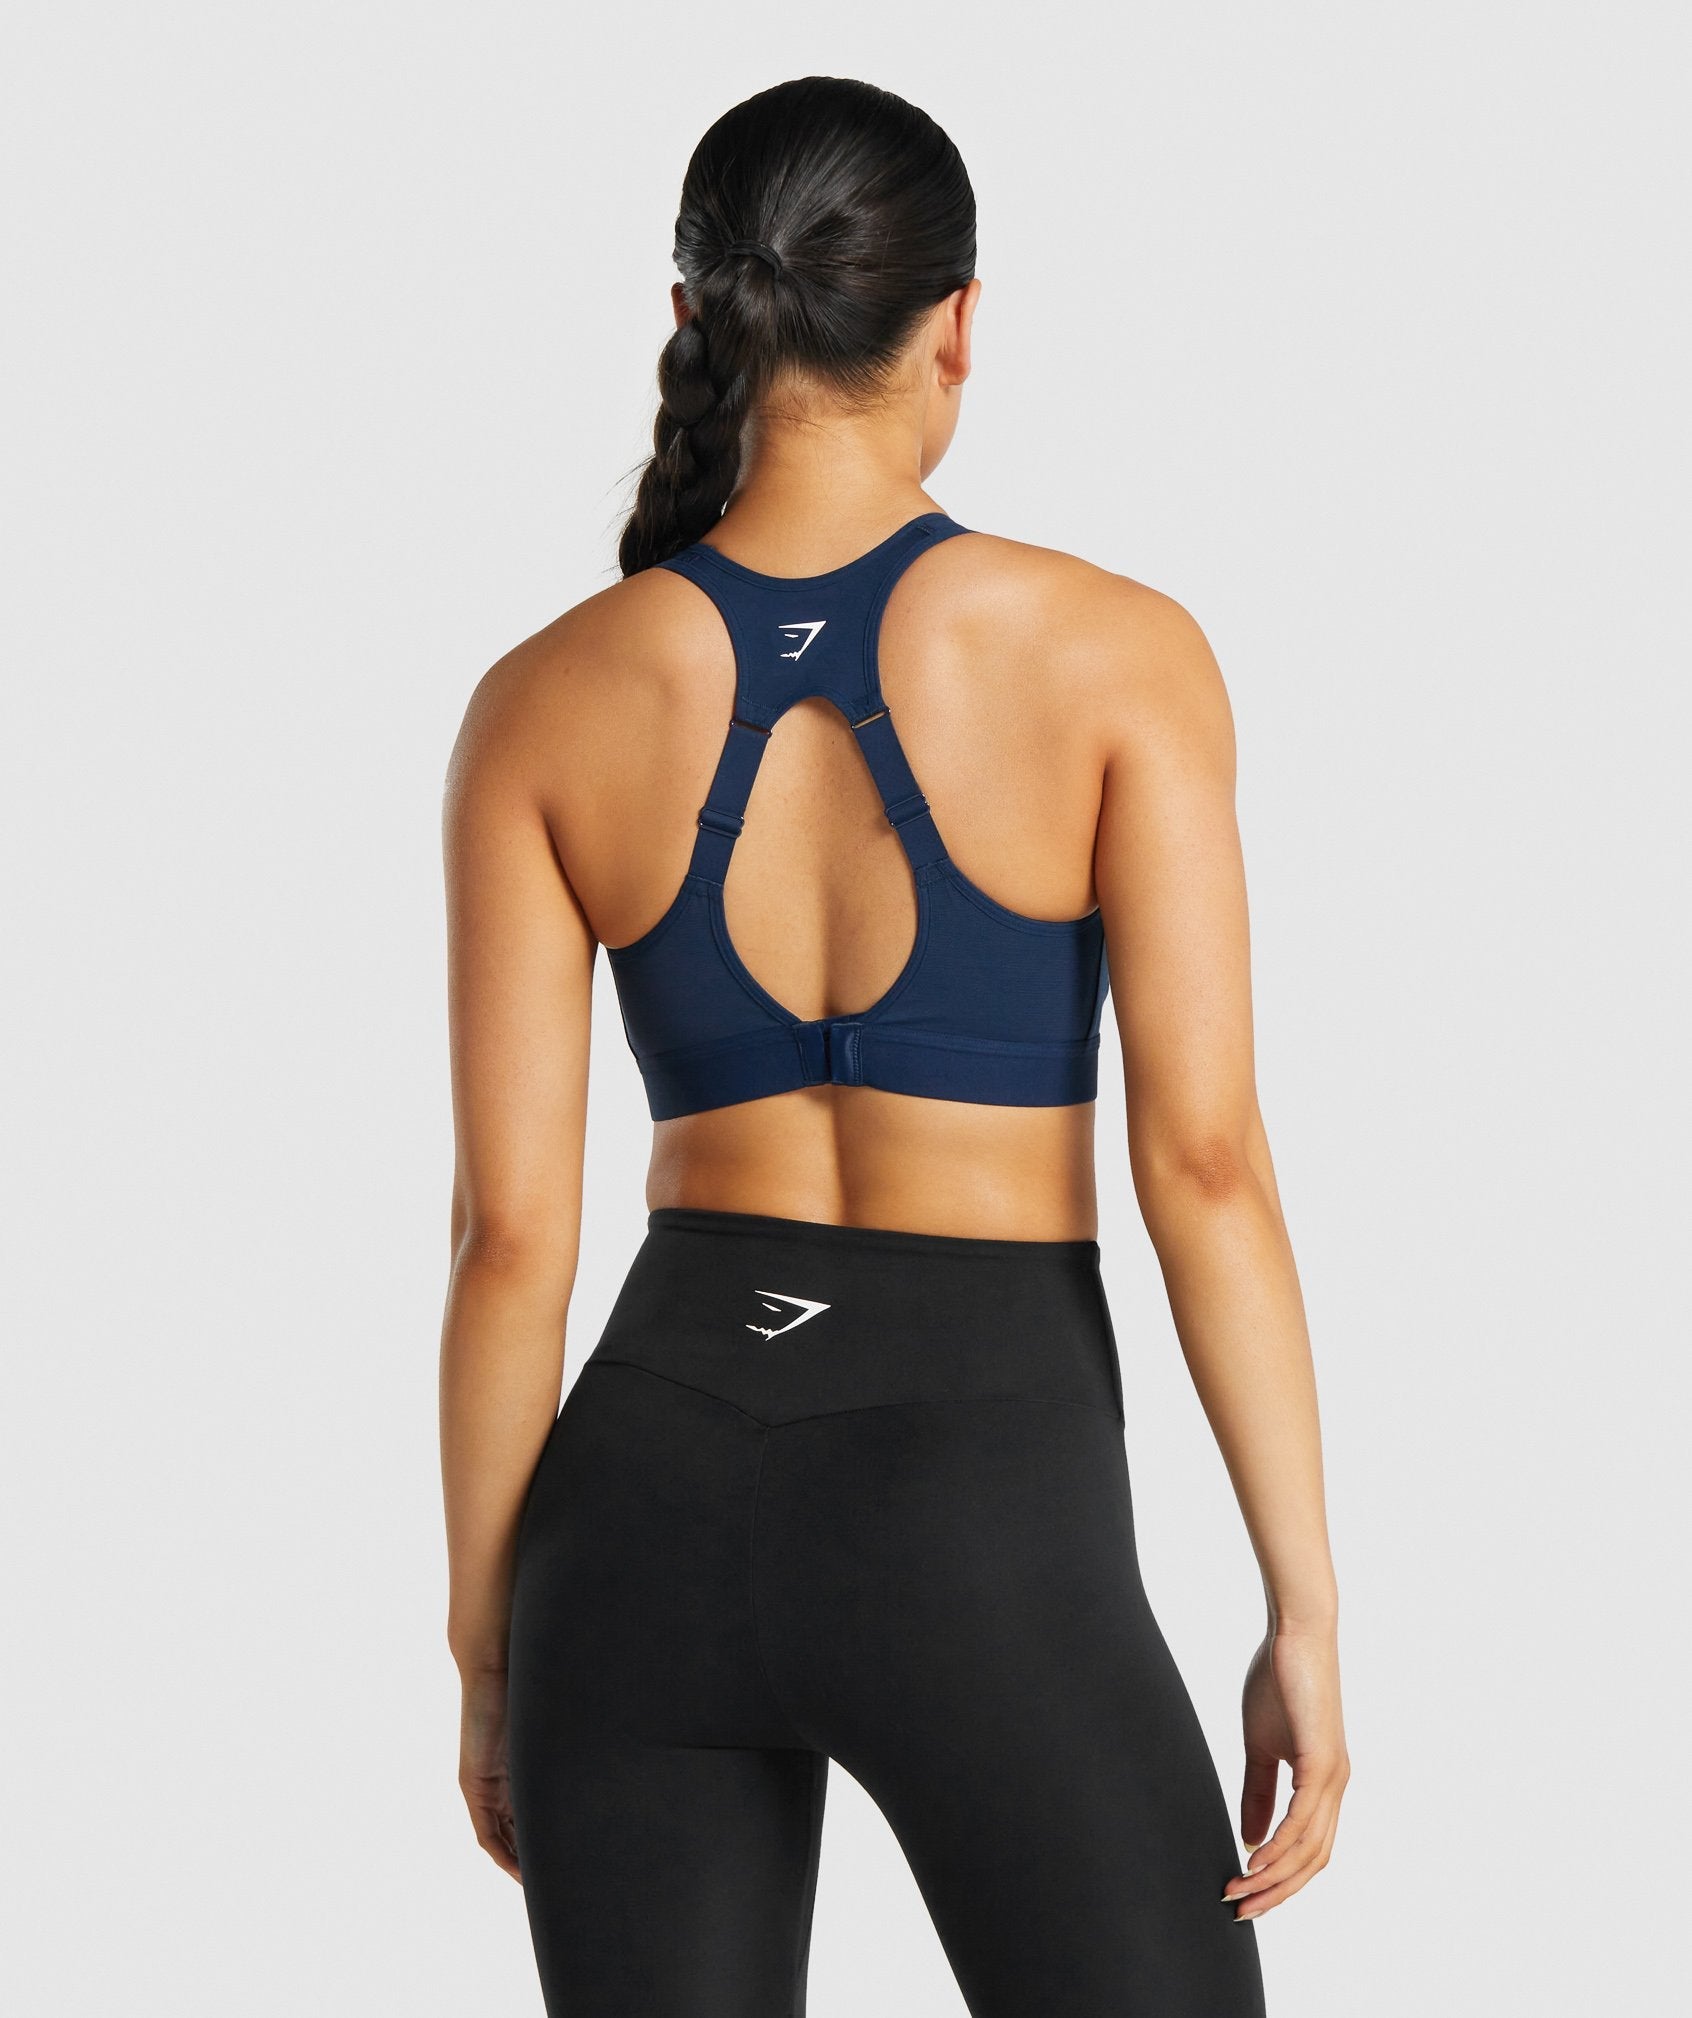 XS Gymshark Fit Sports Bra - Dark Blue, Women's Fashion